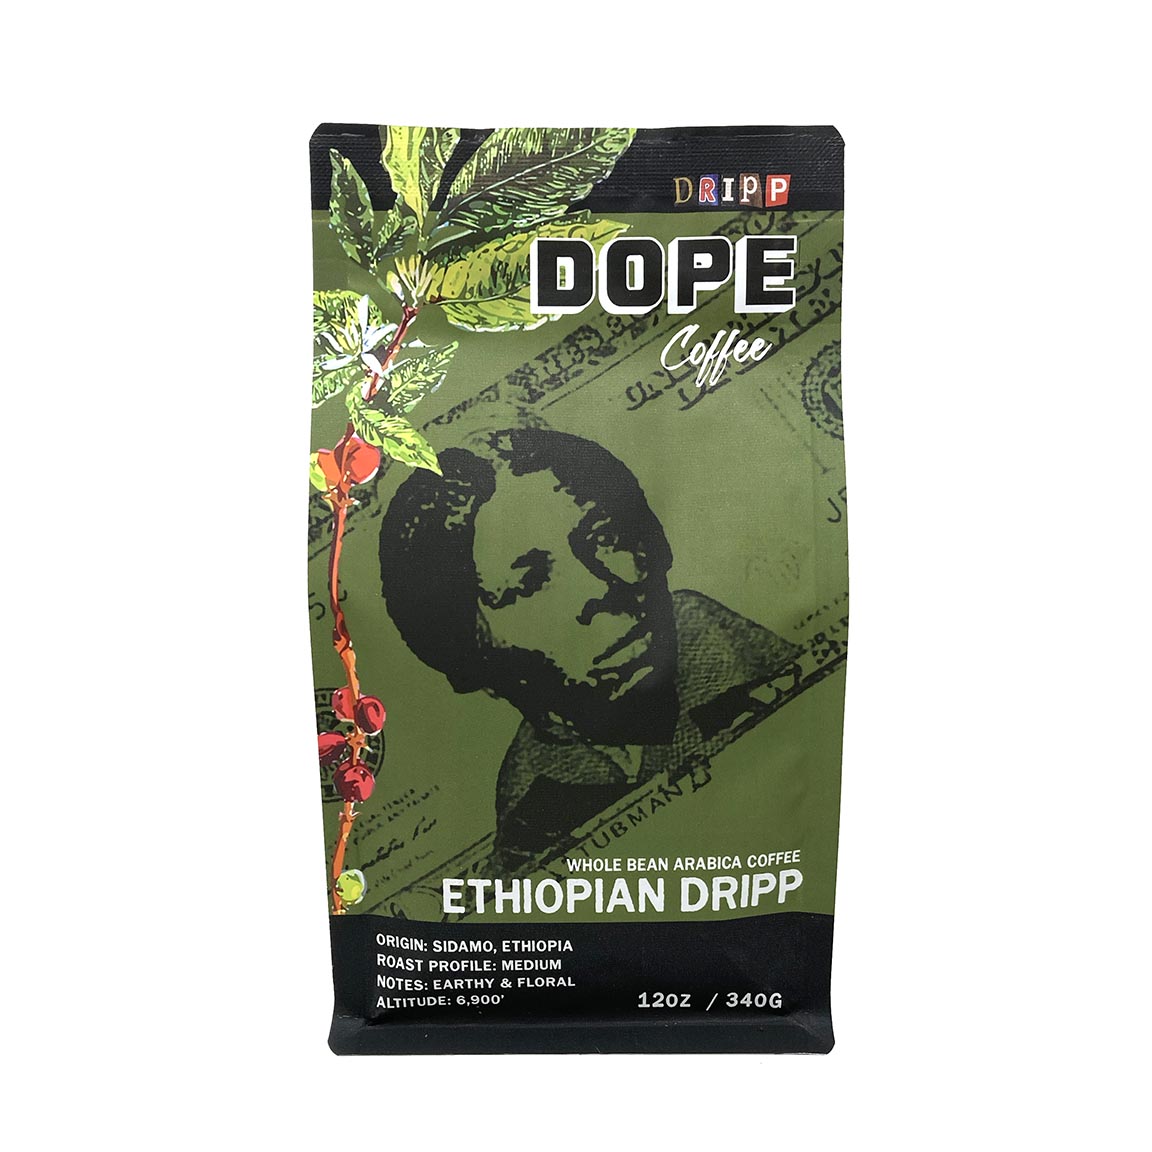 Ethiopian Dripp